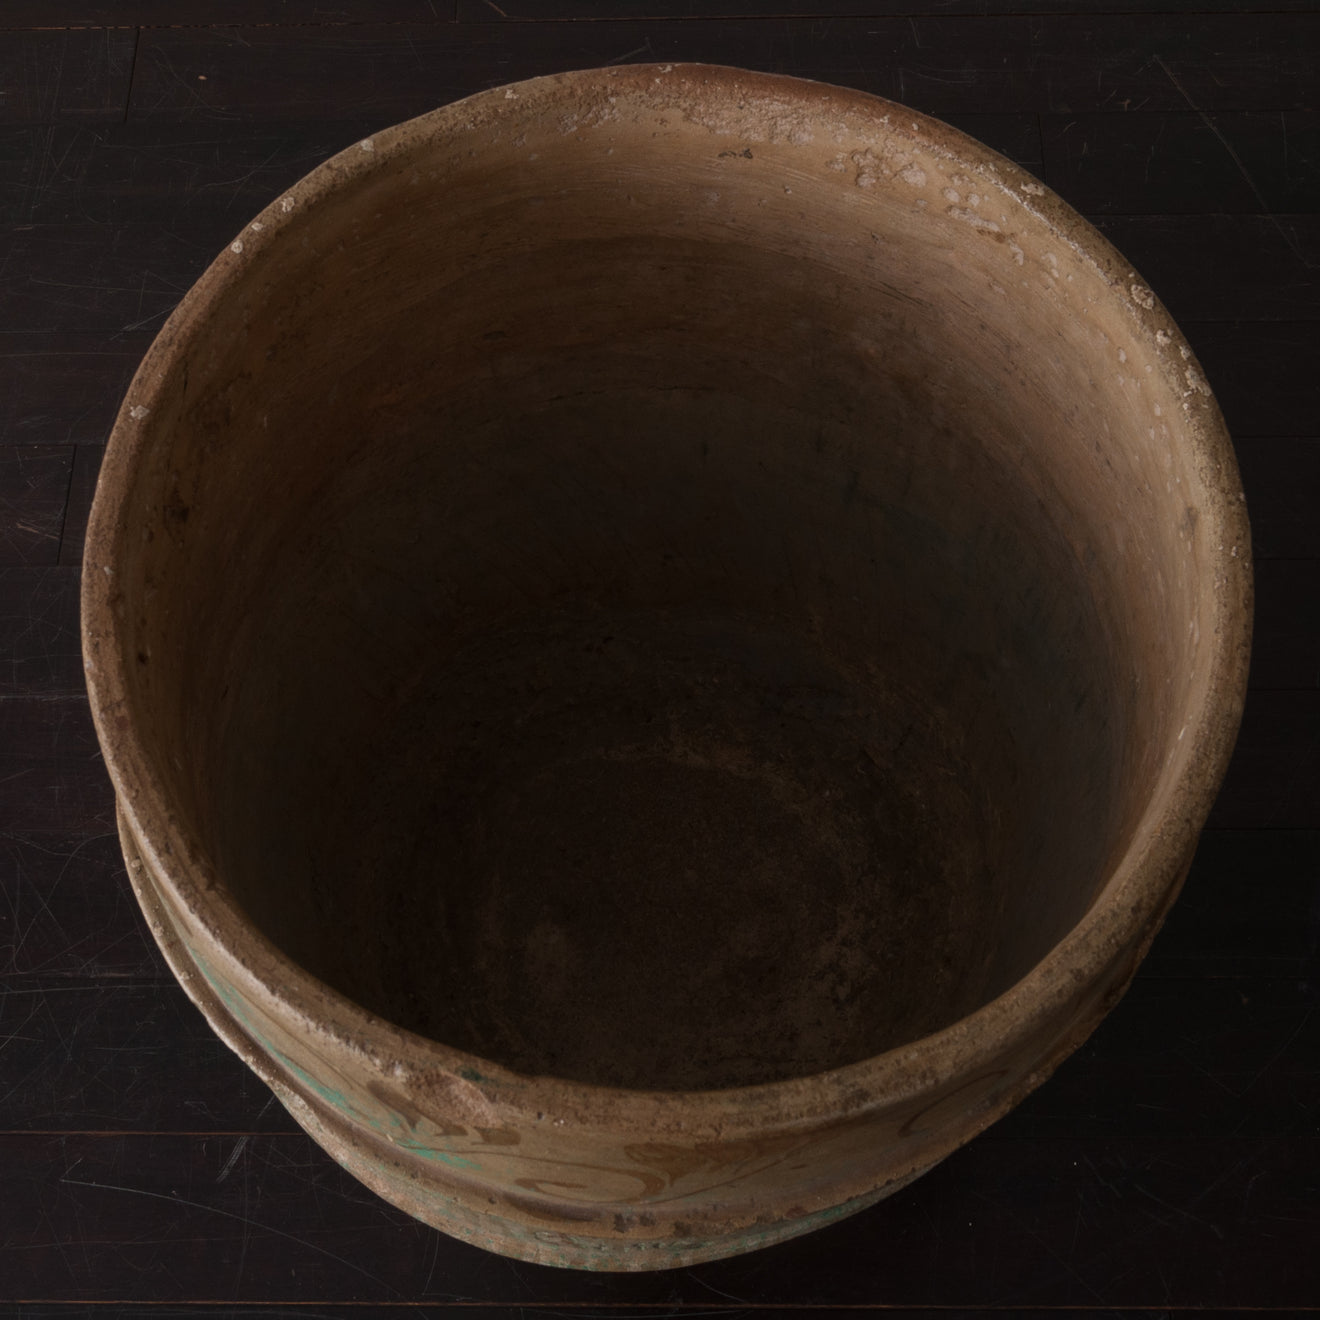 TONALA ceramic vessel